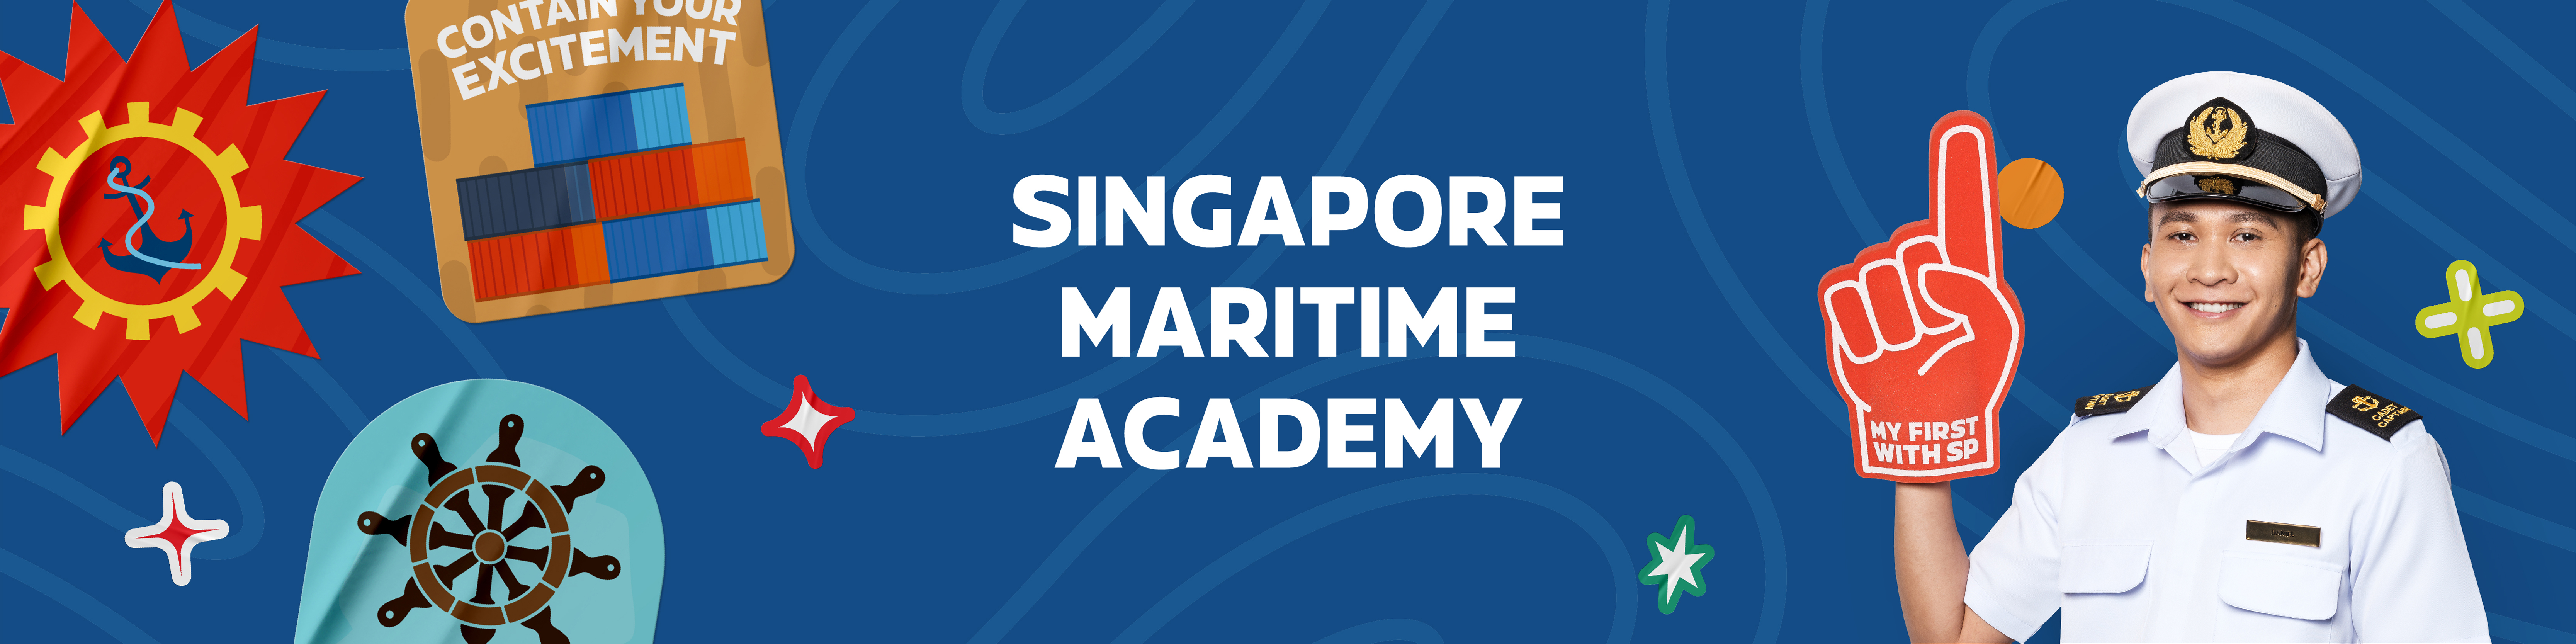 Singapore Maritime Academy